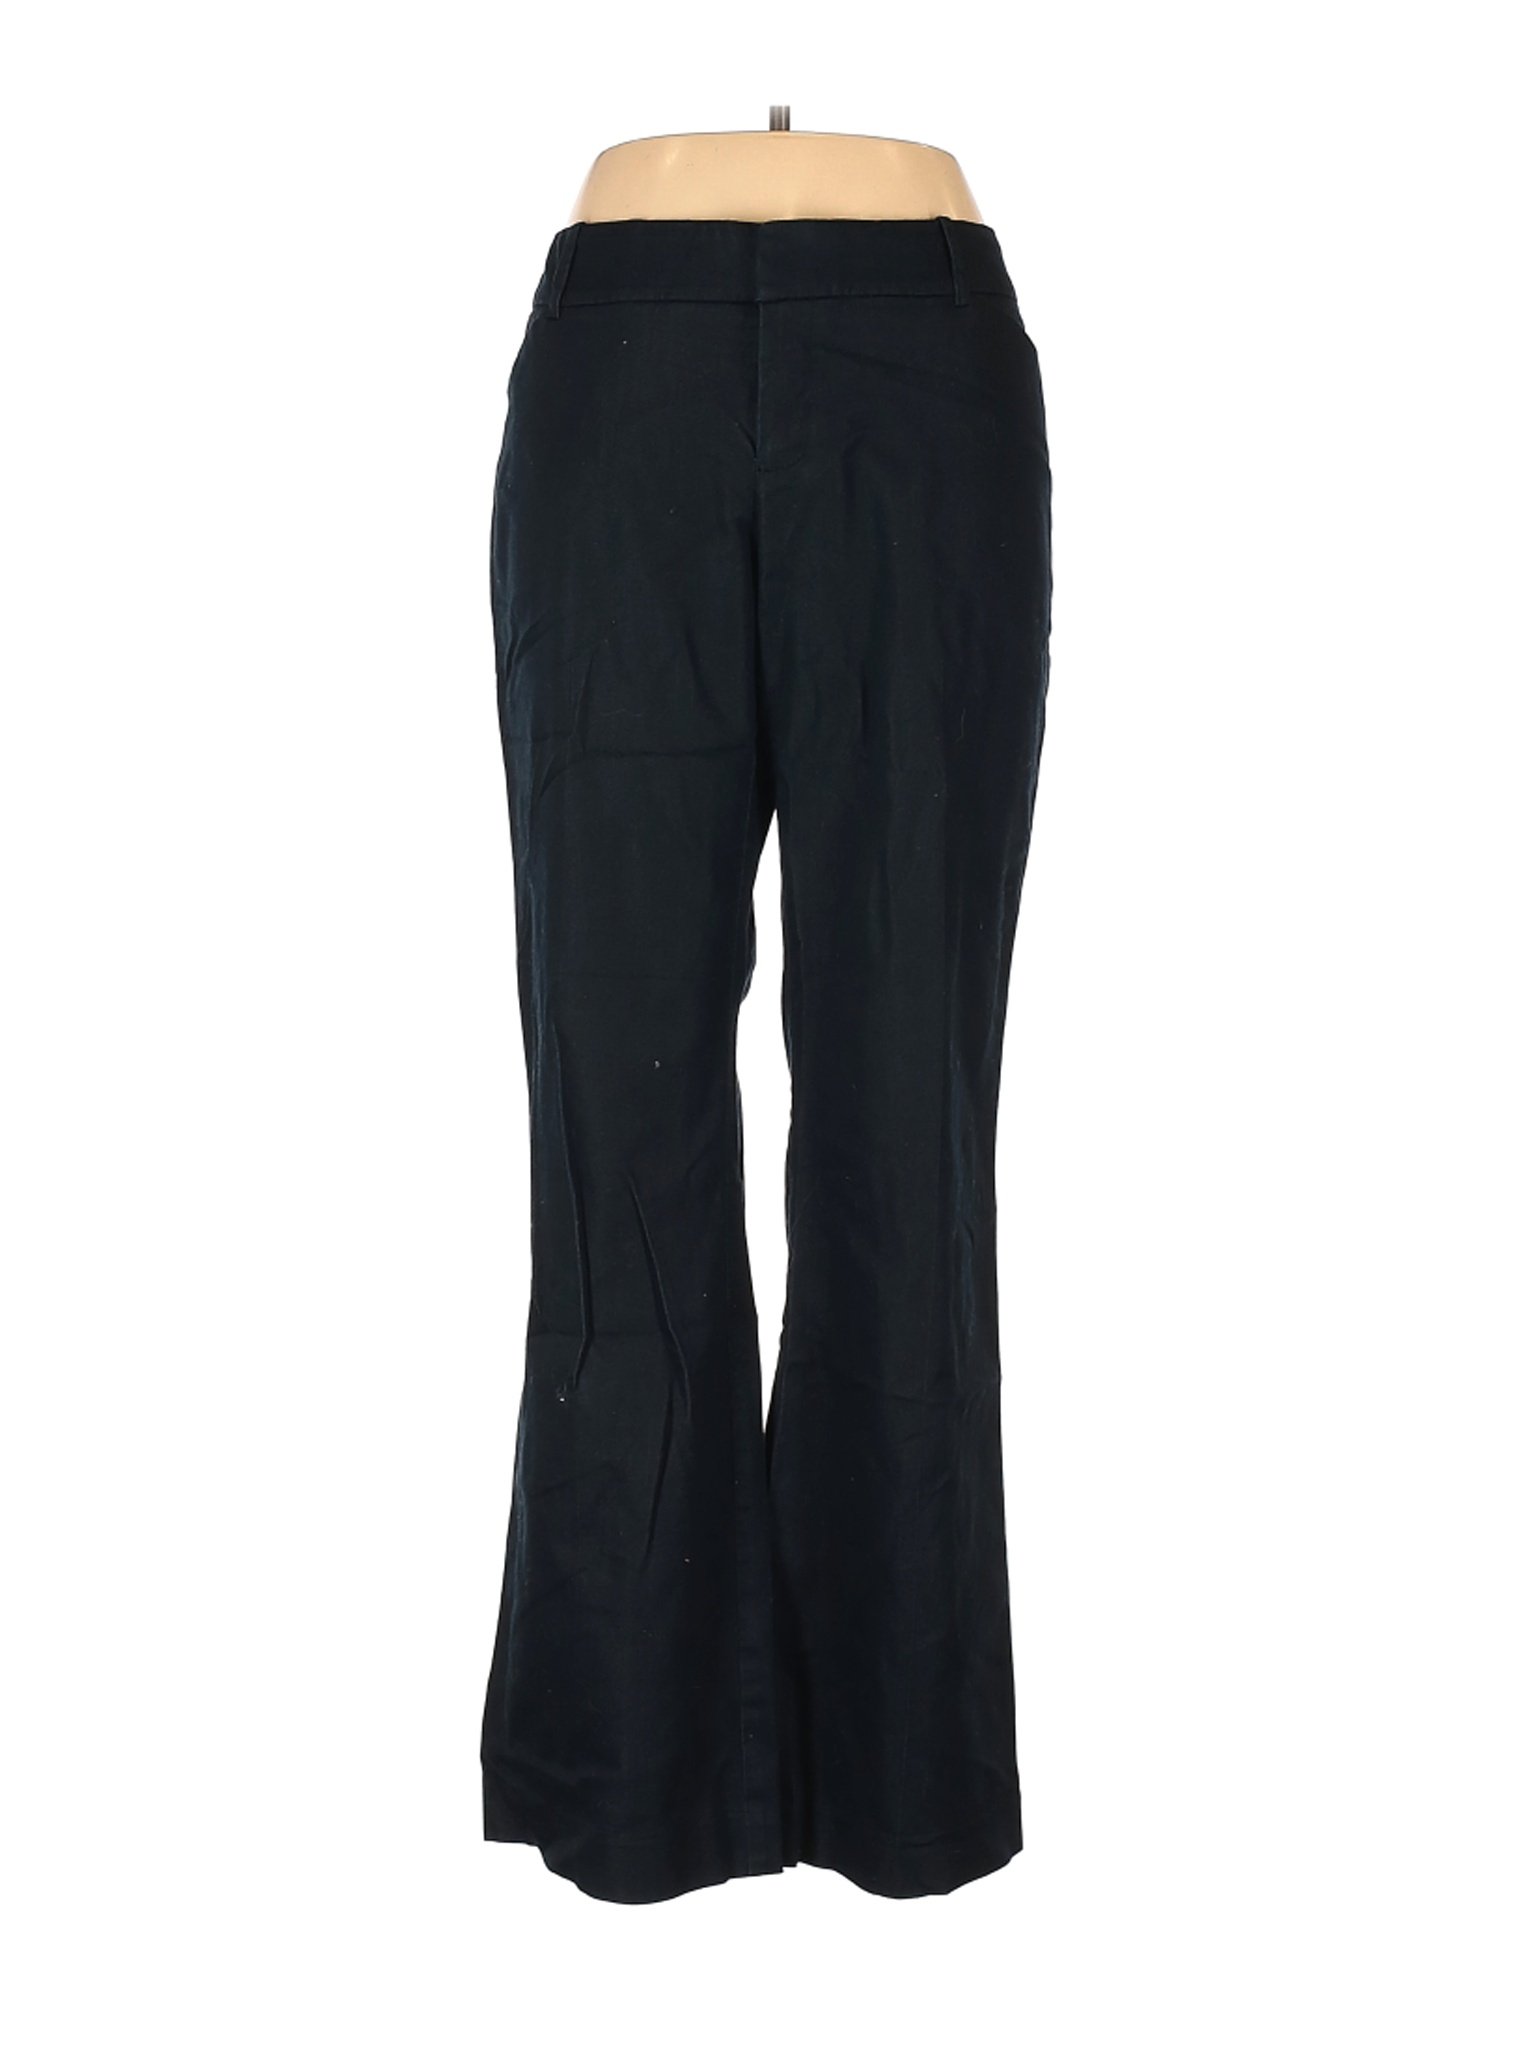 Mossimo Women Black Dress Pants 14 | eBay